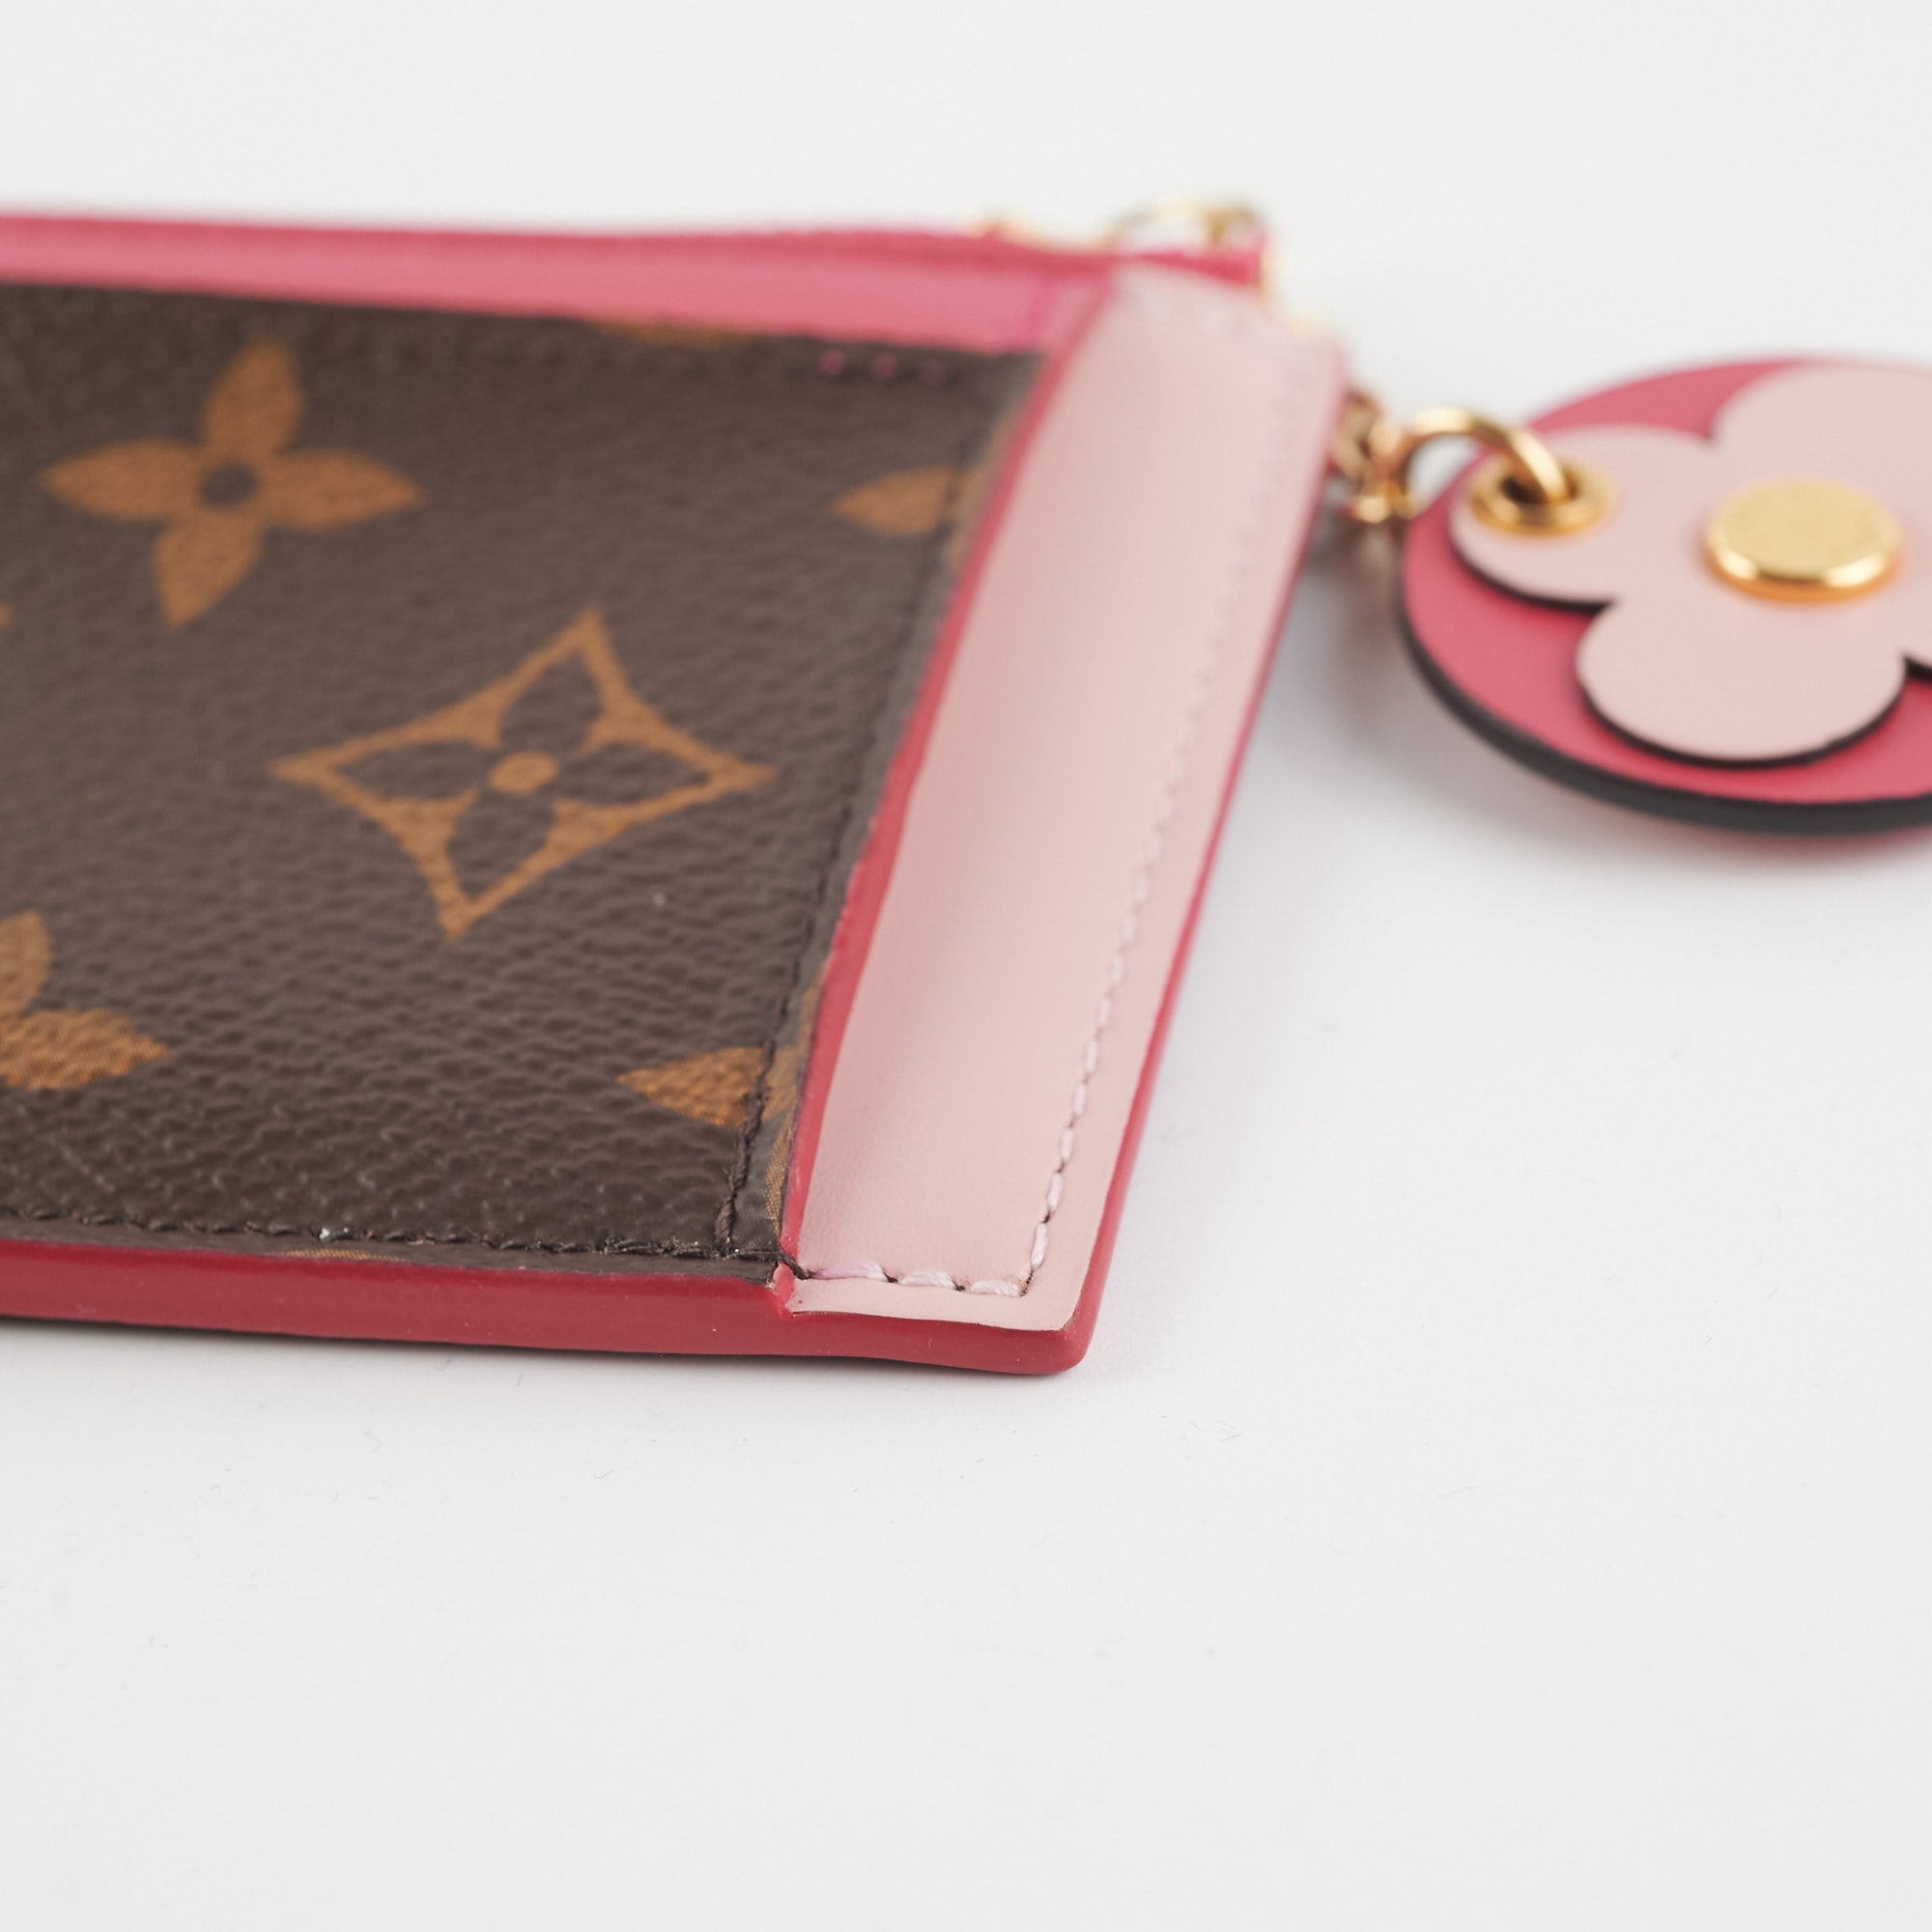 Louis Vuitton Card Holder Monogram Pink - THE PURSE AFFAIR